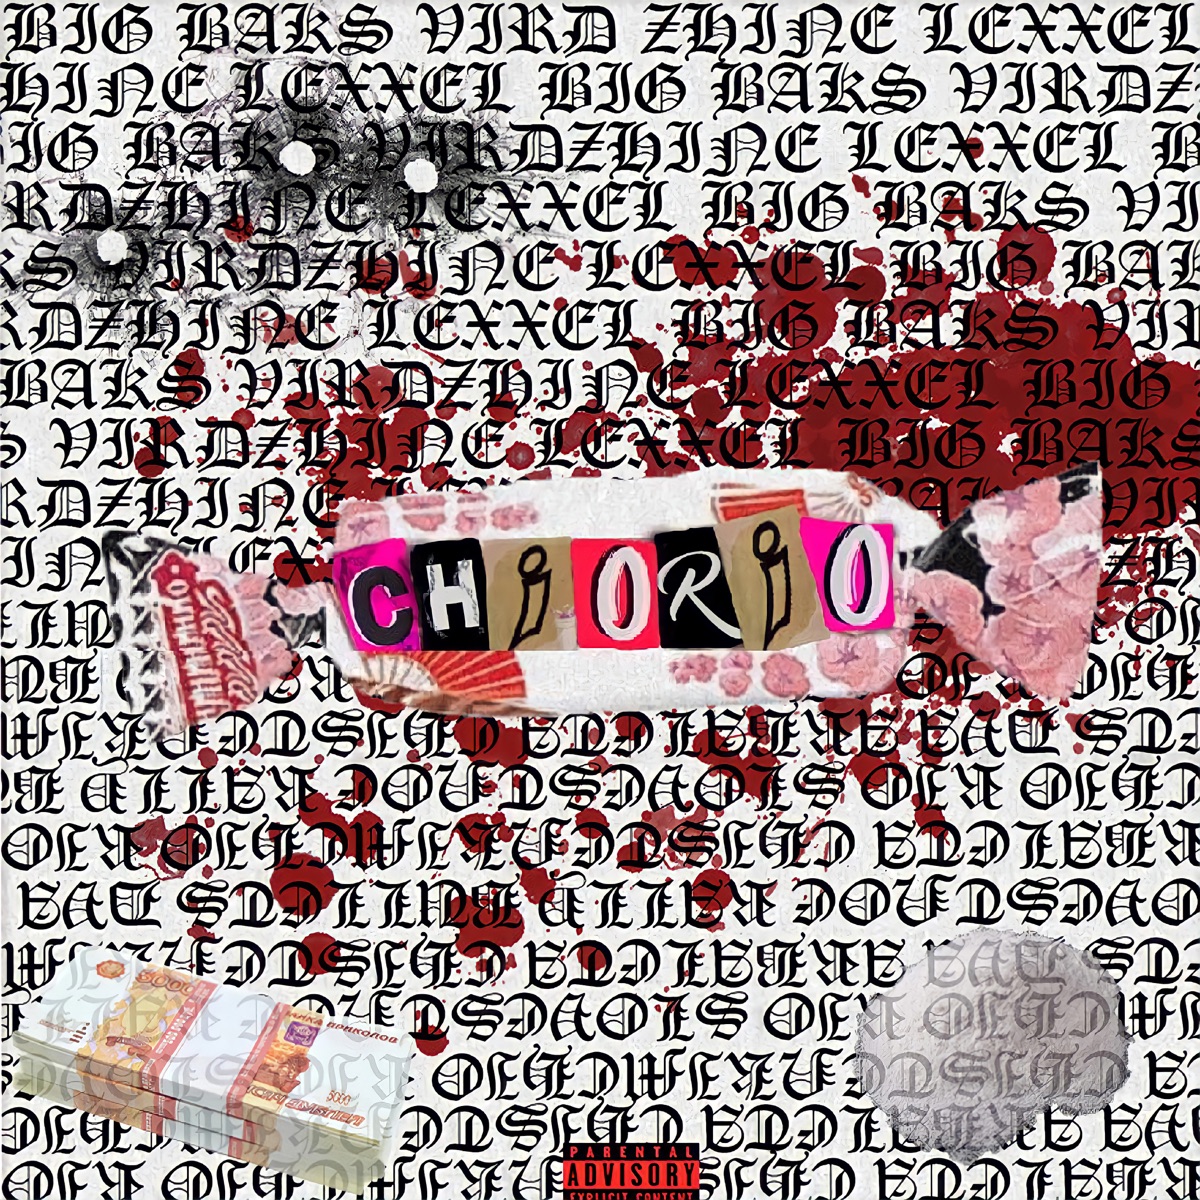 CHIORIO - EP - Album by BIG_BAK$ - Apple Music